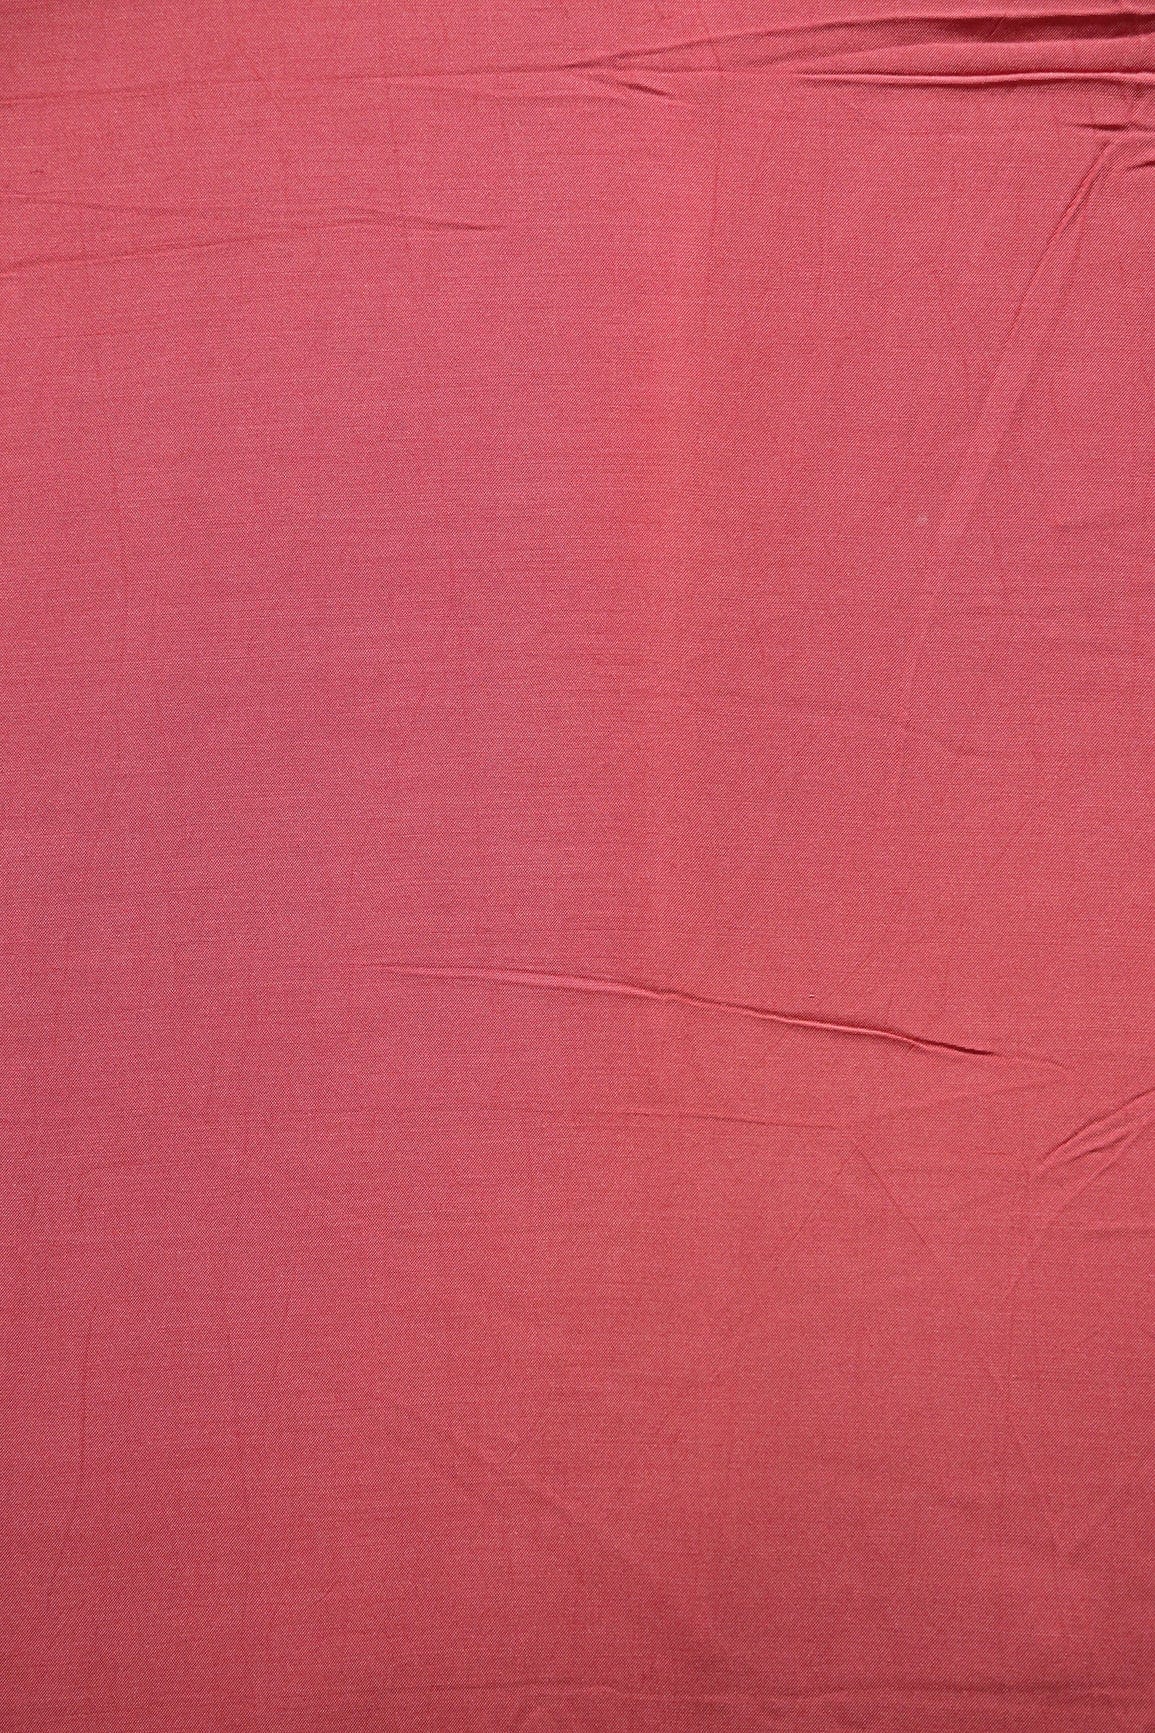 doeraa Plain Fabrics Brick Red Dyed Muslin Fabric